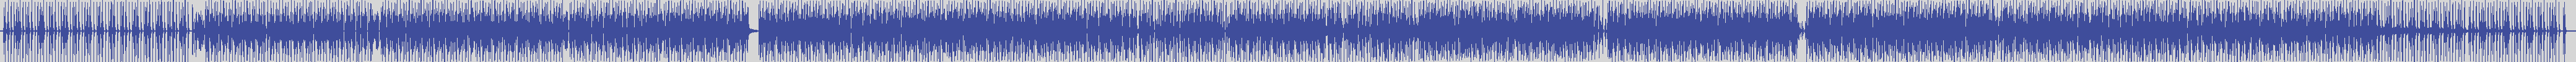 atomic_recordings [AR019] Jitzu, Sire_g - Propaganda [Original Mix] audio wave form